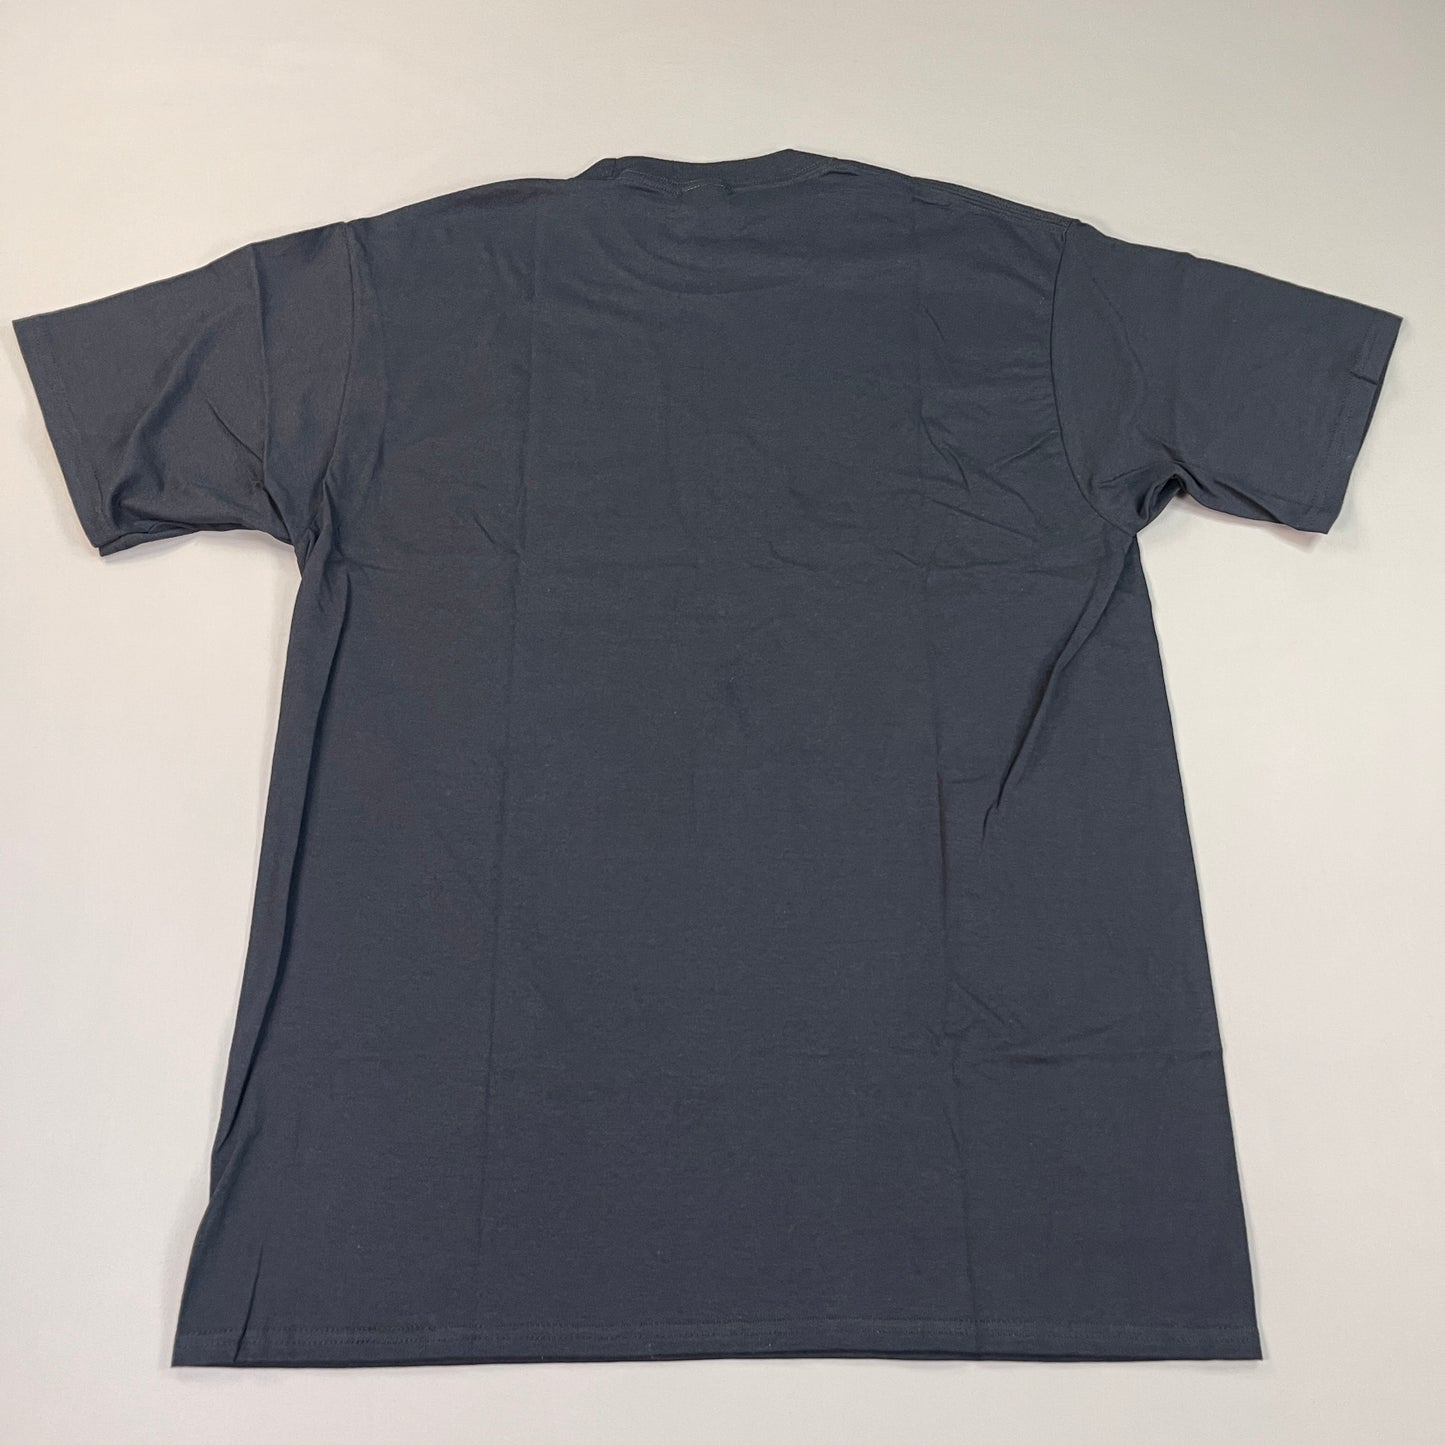 T-MOBILE Tee Shirt Short Sleeve TEX Famous For Care Men's Unisex Sz L Black/Pink (New)